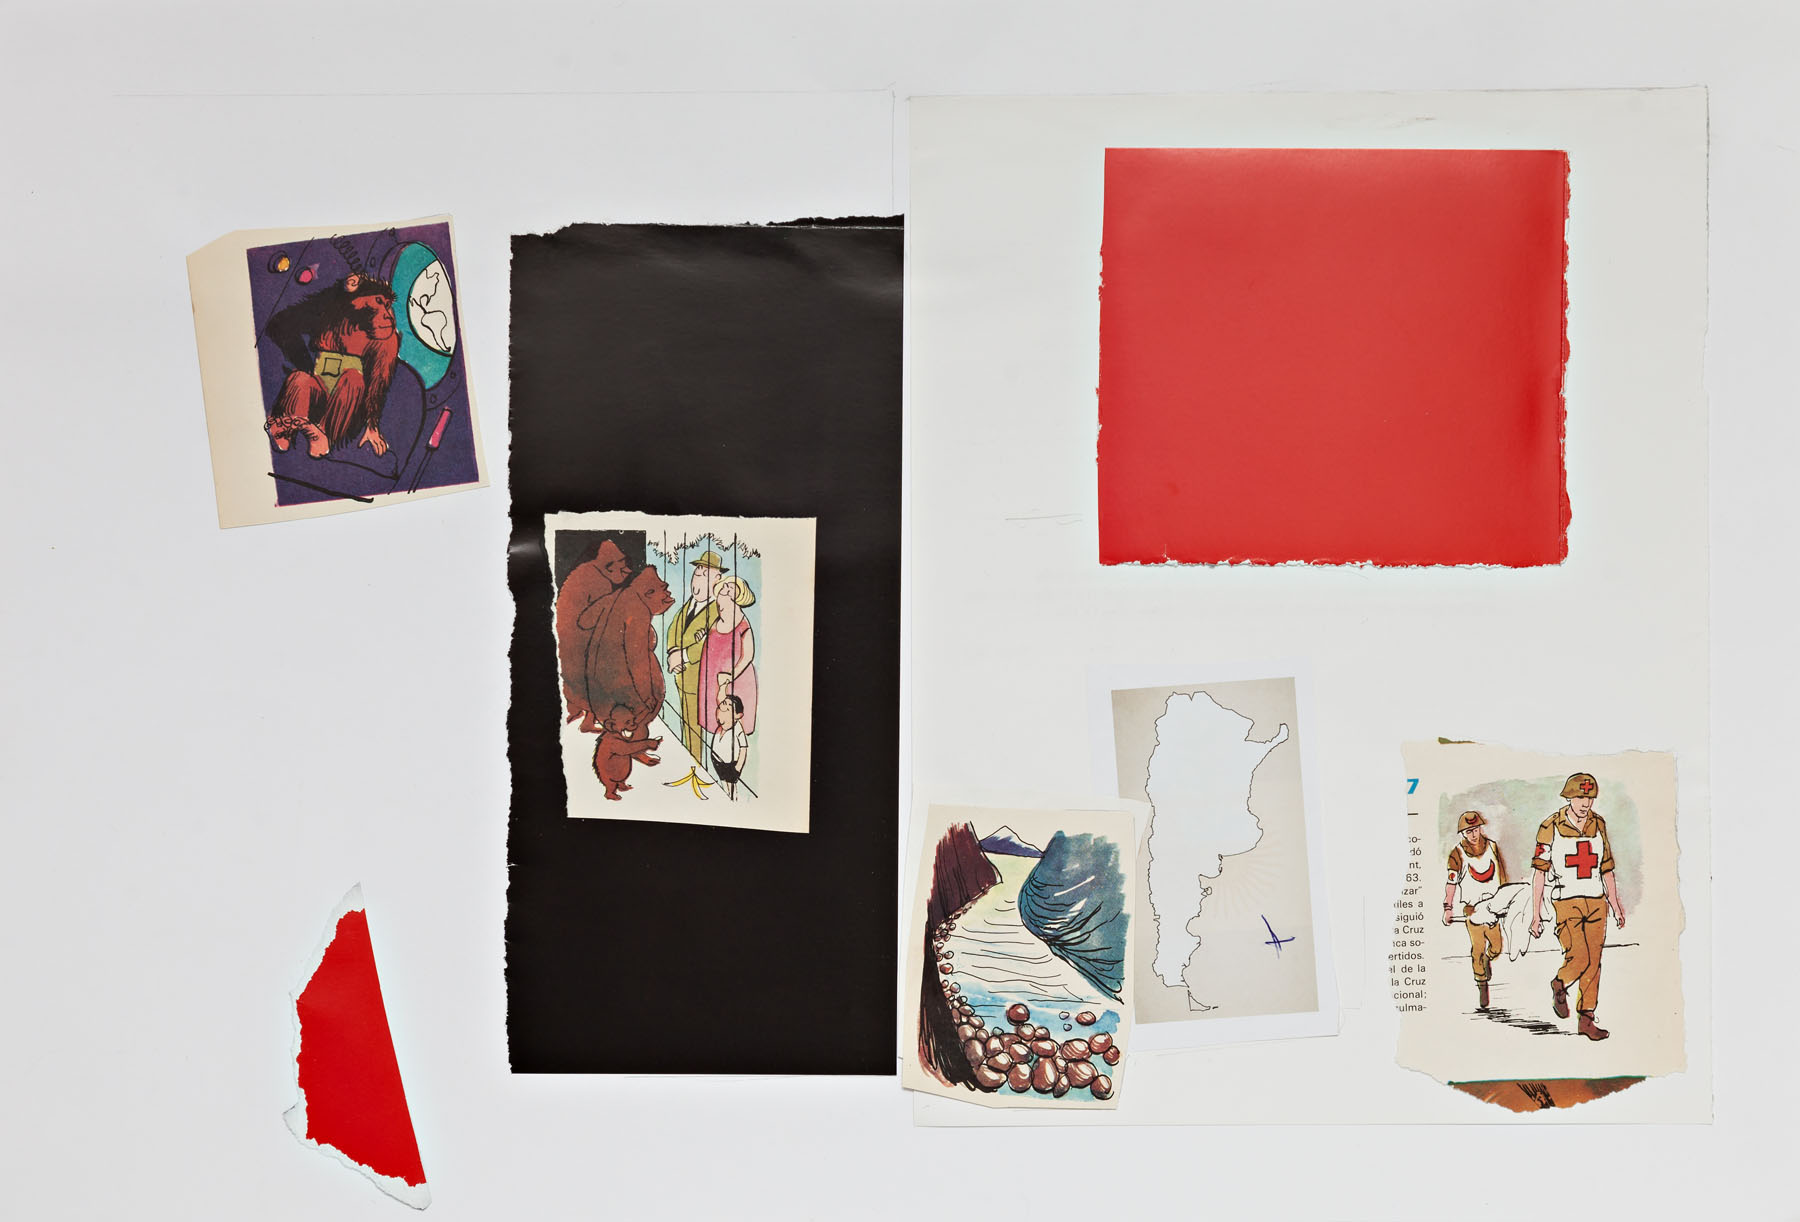 Serie Cuarentena, papel collage, 32 cm x 47 cm, 2020